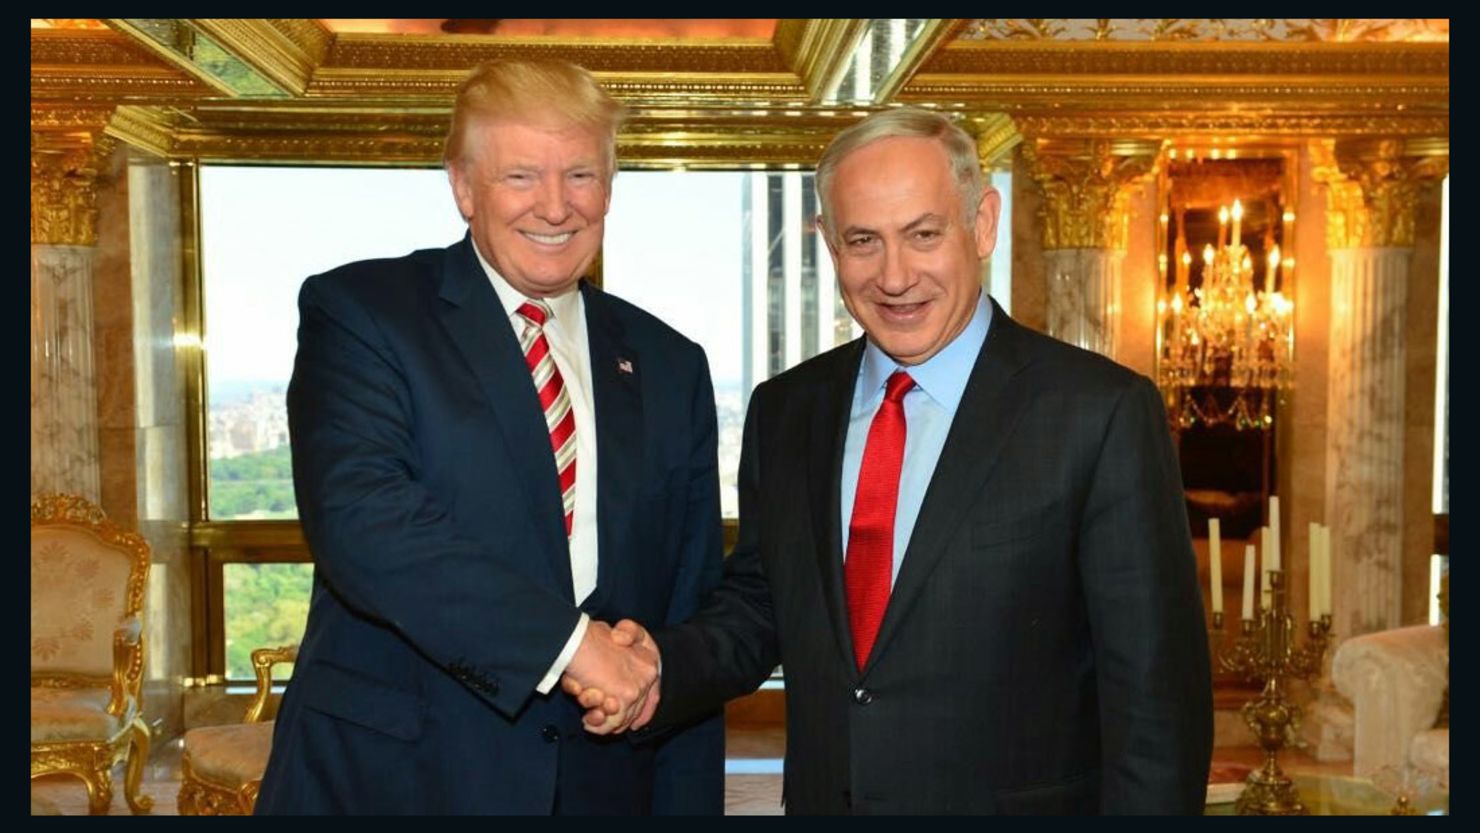 Netanyahu: Trump 'feels very warmly' about Israel | CNN Politics